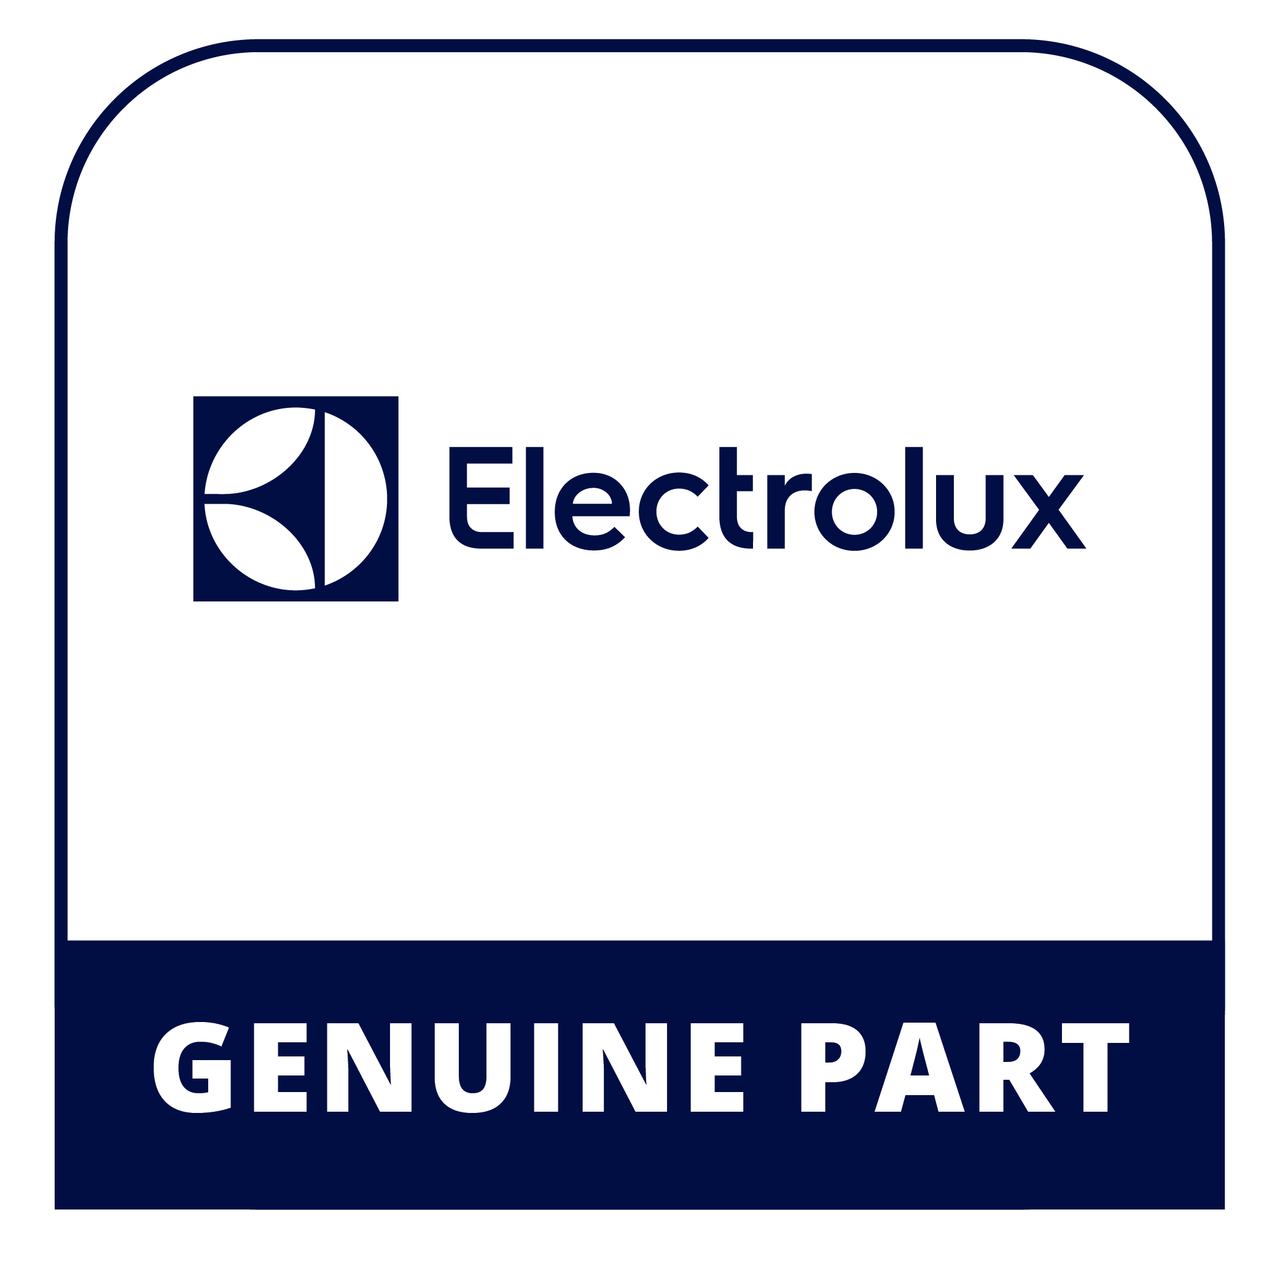 Frigidaire - Electrolux 5304503807 Sensor - Genuine Electrolux Part